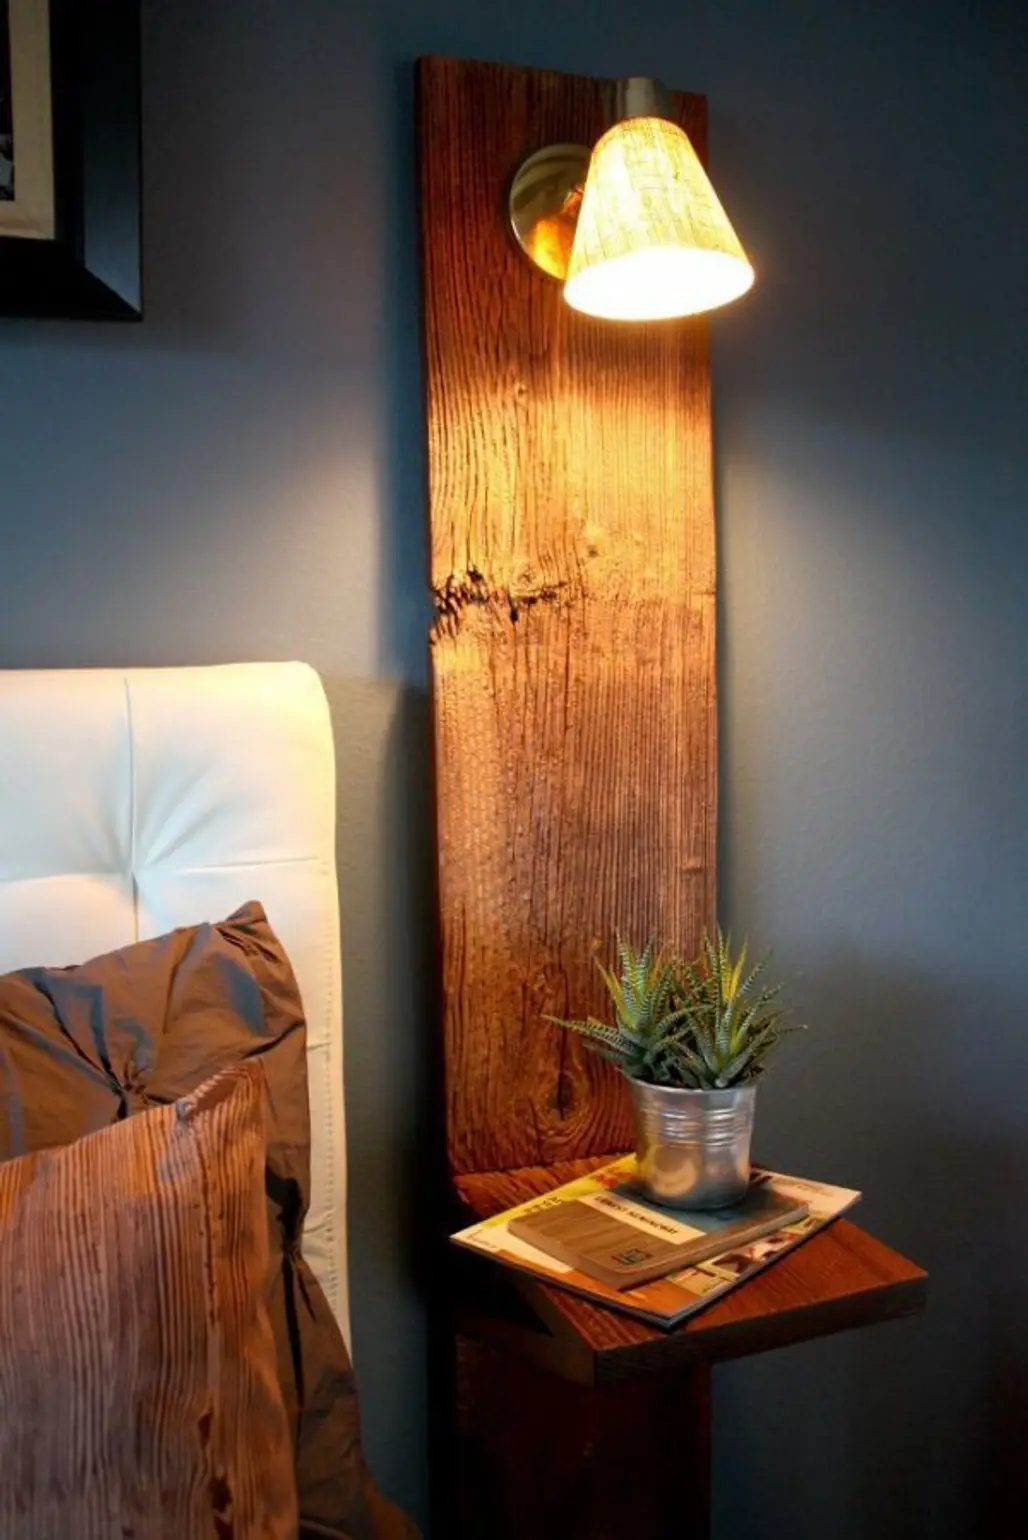 Combine Lamp and Shelf